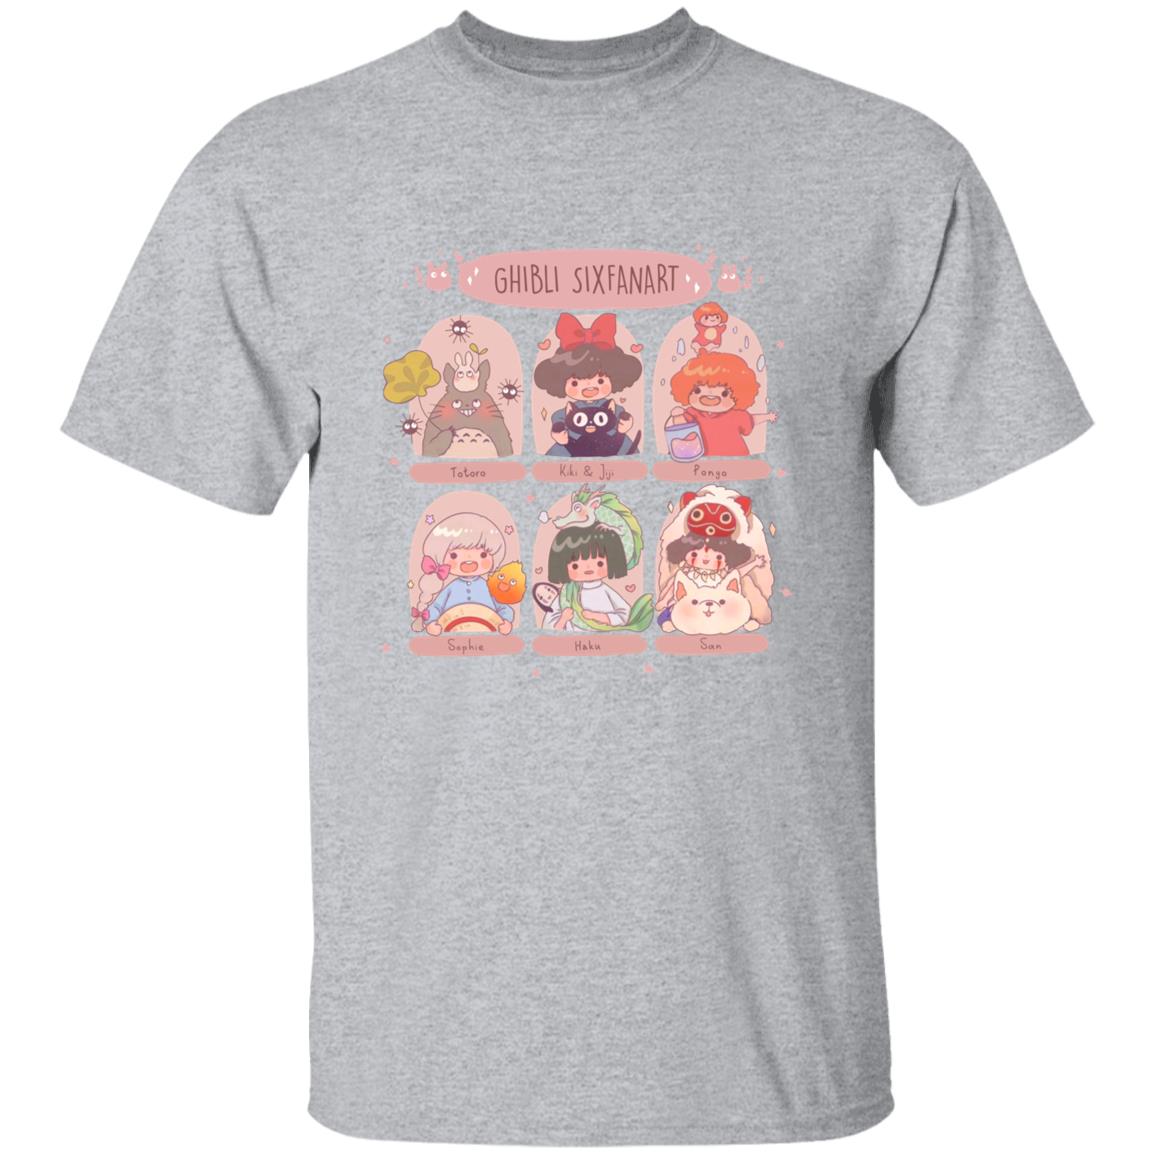 Studio Ghibli Sixfanart T Shirt